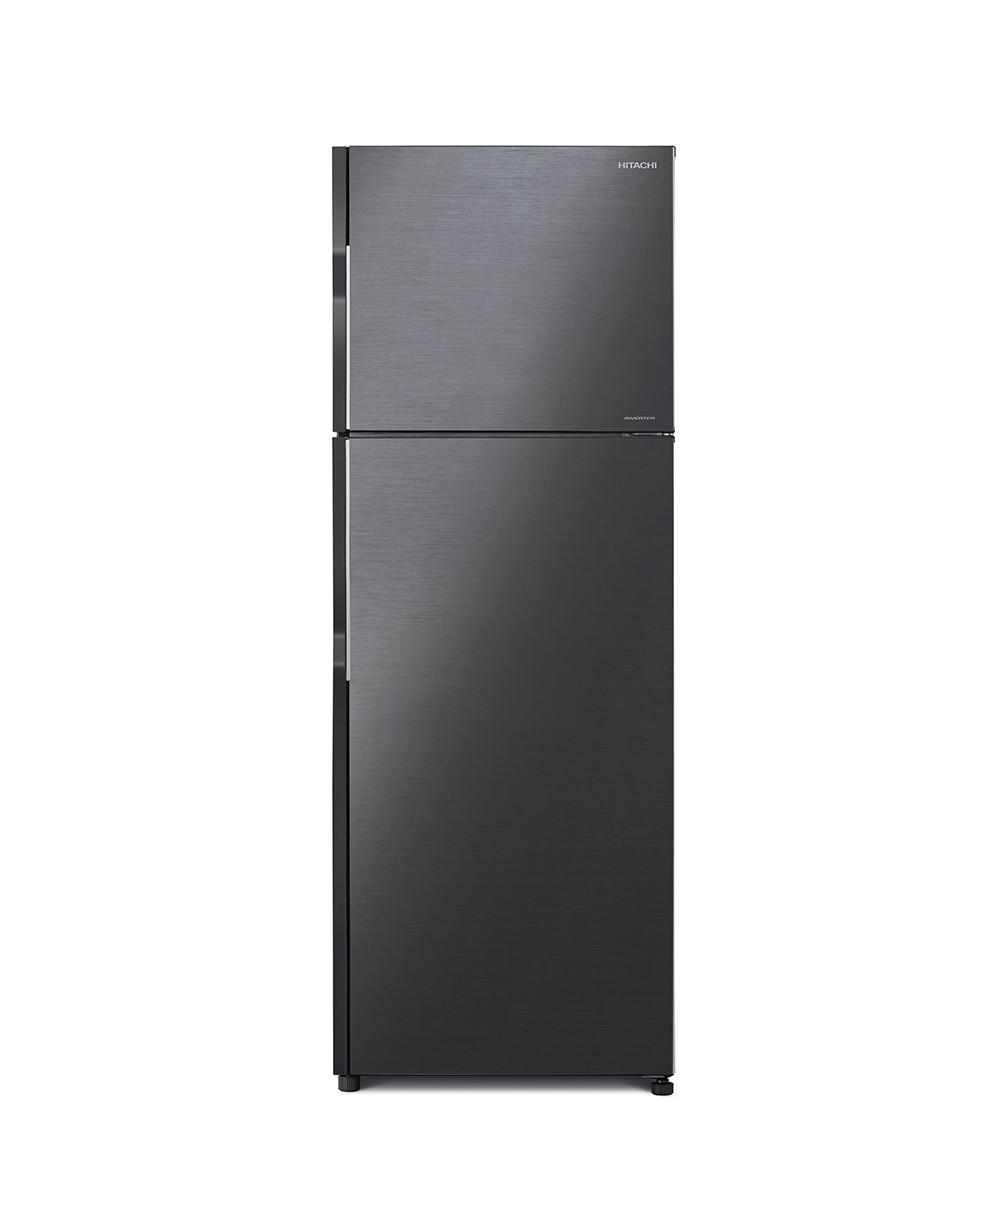 Image result for Hitachi refrigerator